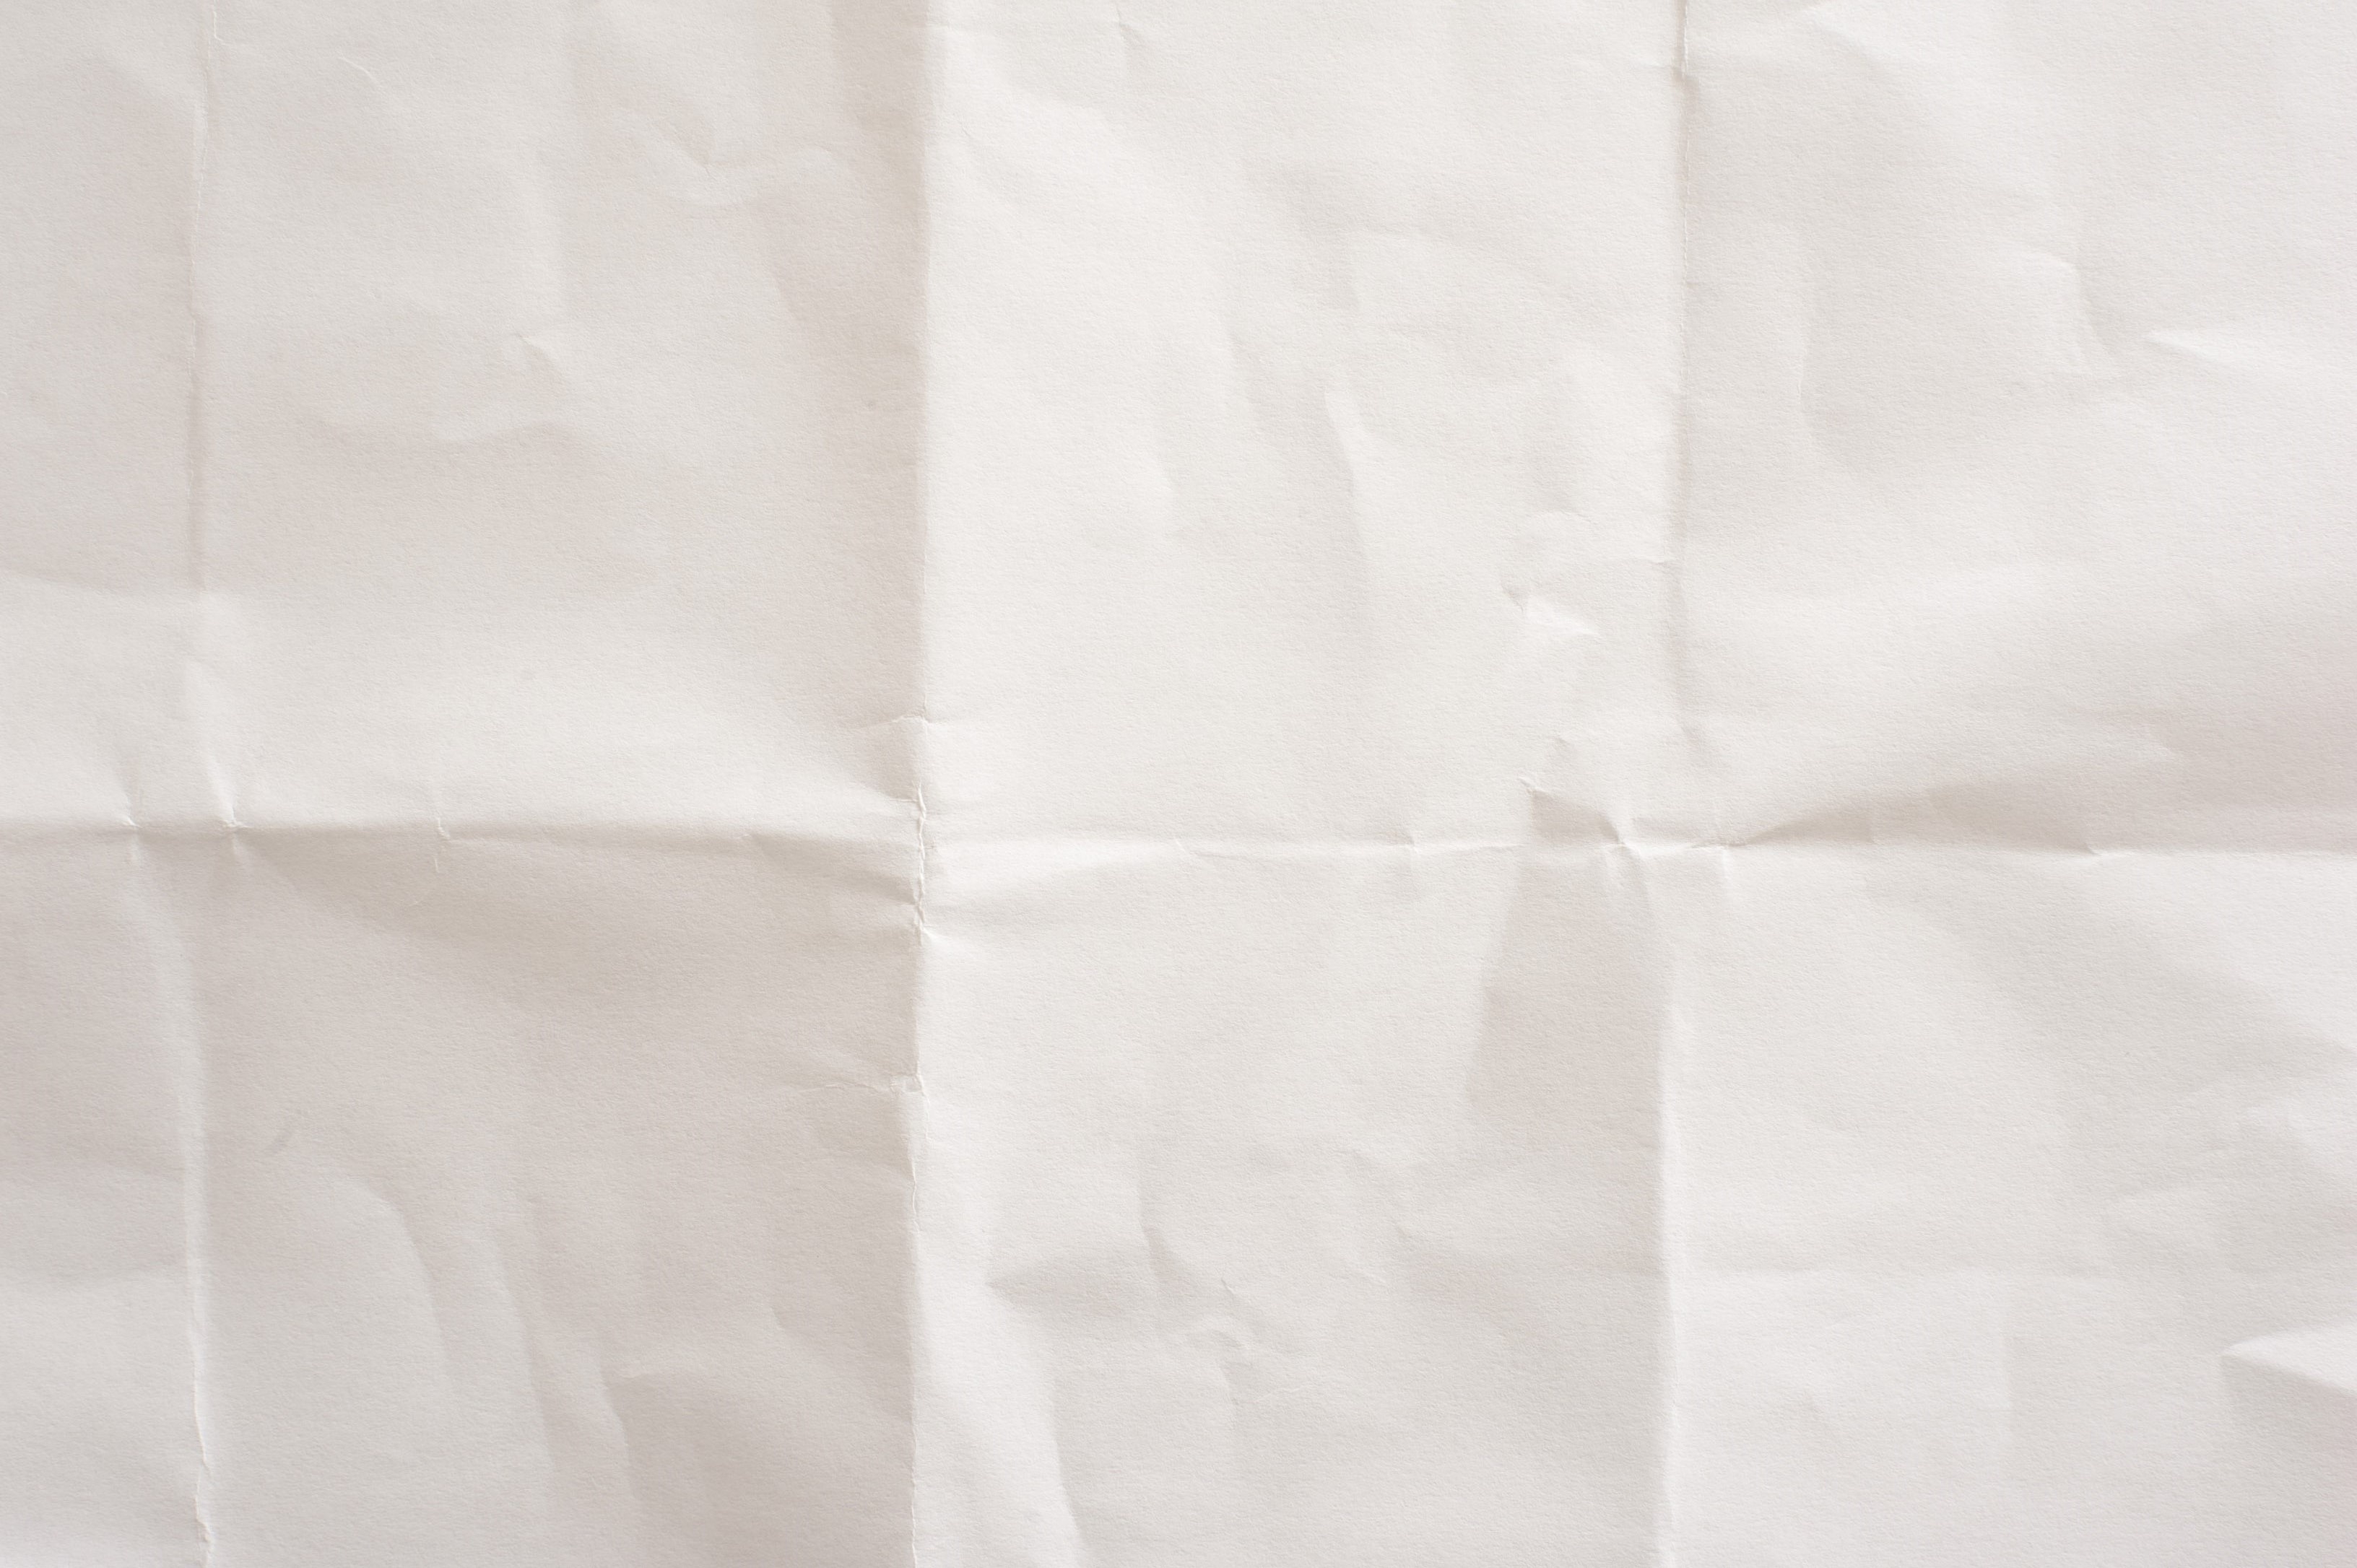 Folded Paper Background | World of Label